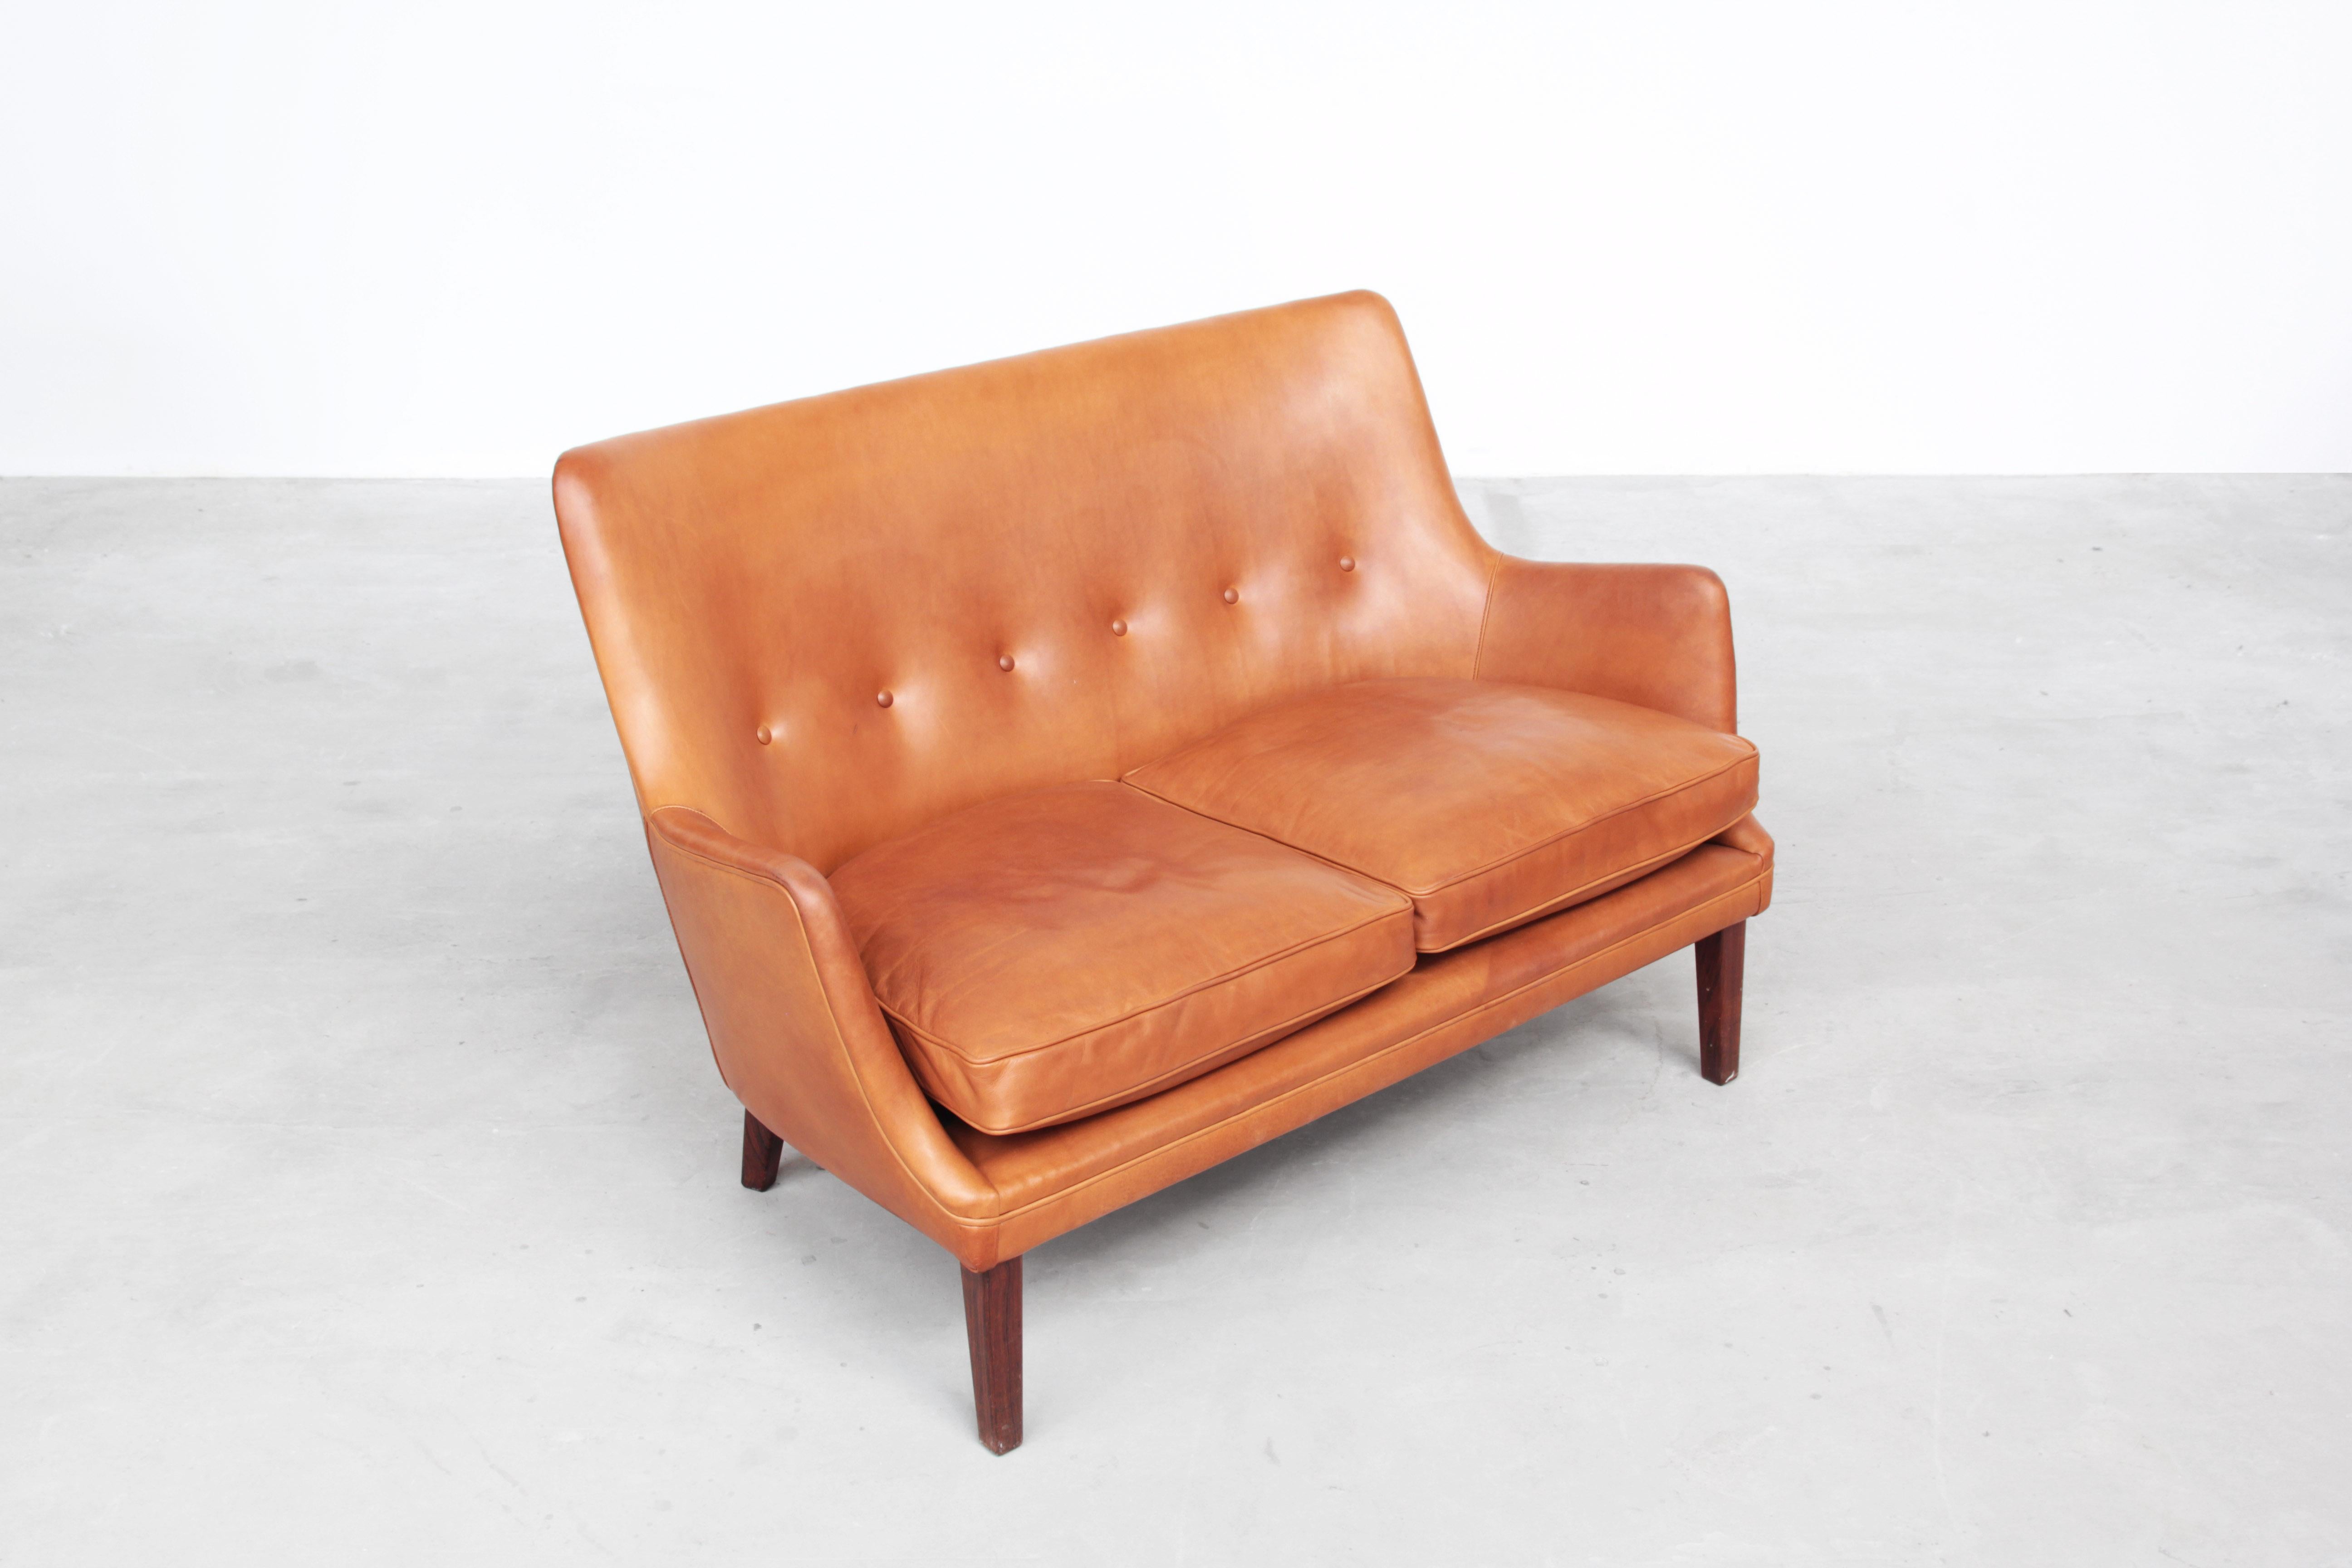 Leather Rare Sofa by Arne Vodder for Ivan Schlechter Denmark, 1953